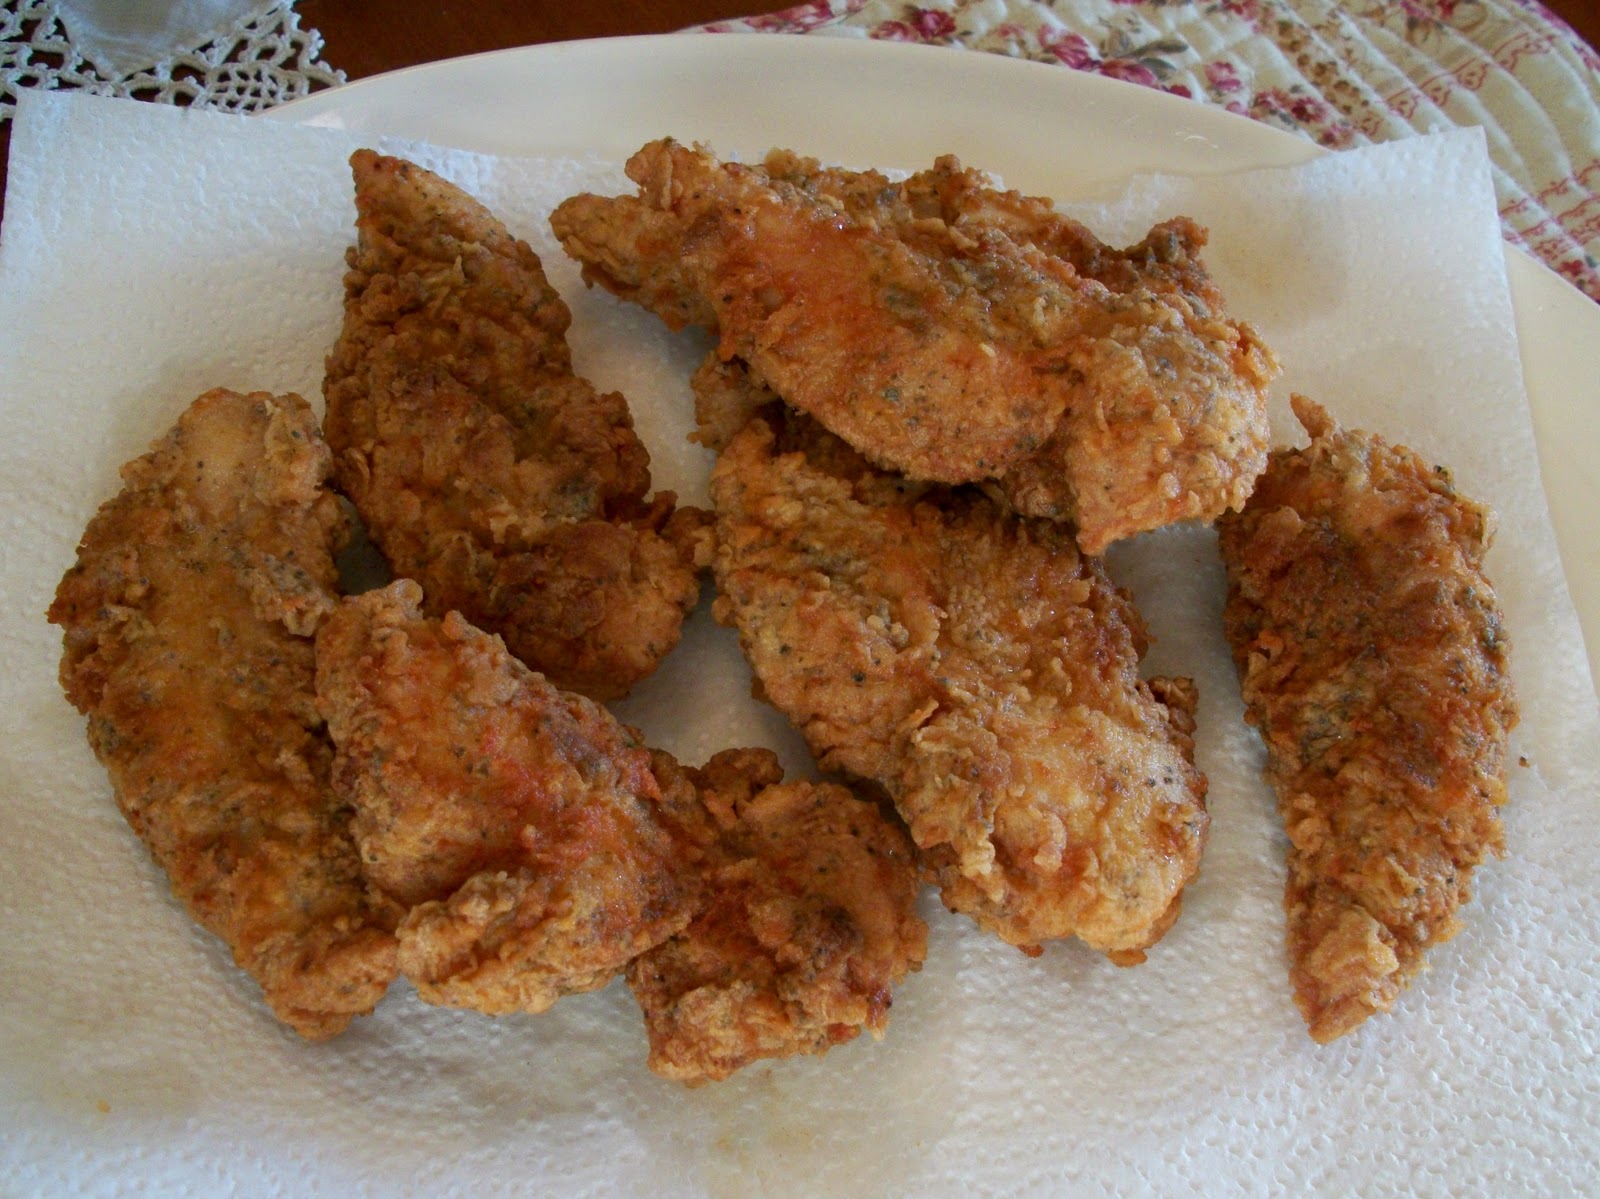 Fried chicken strips